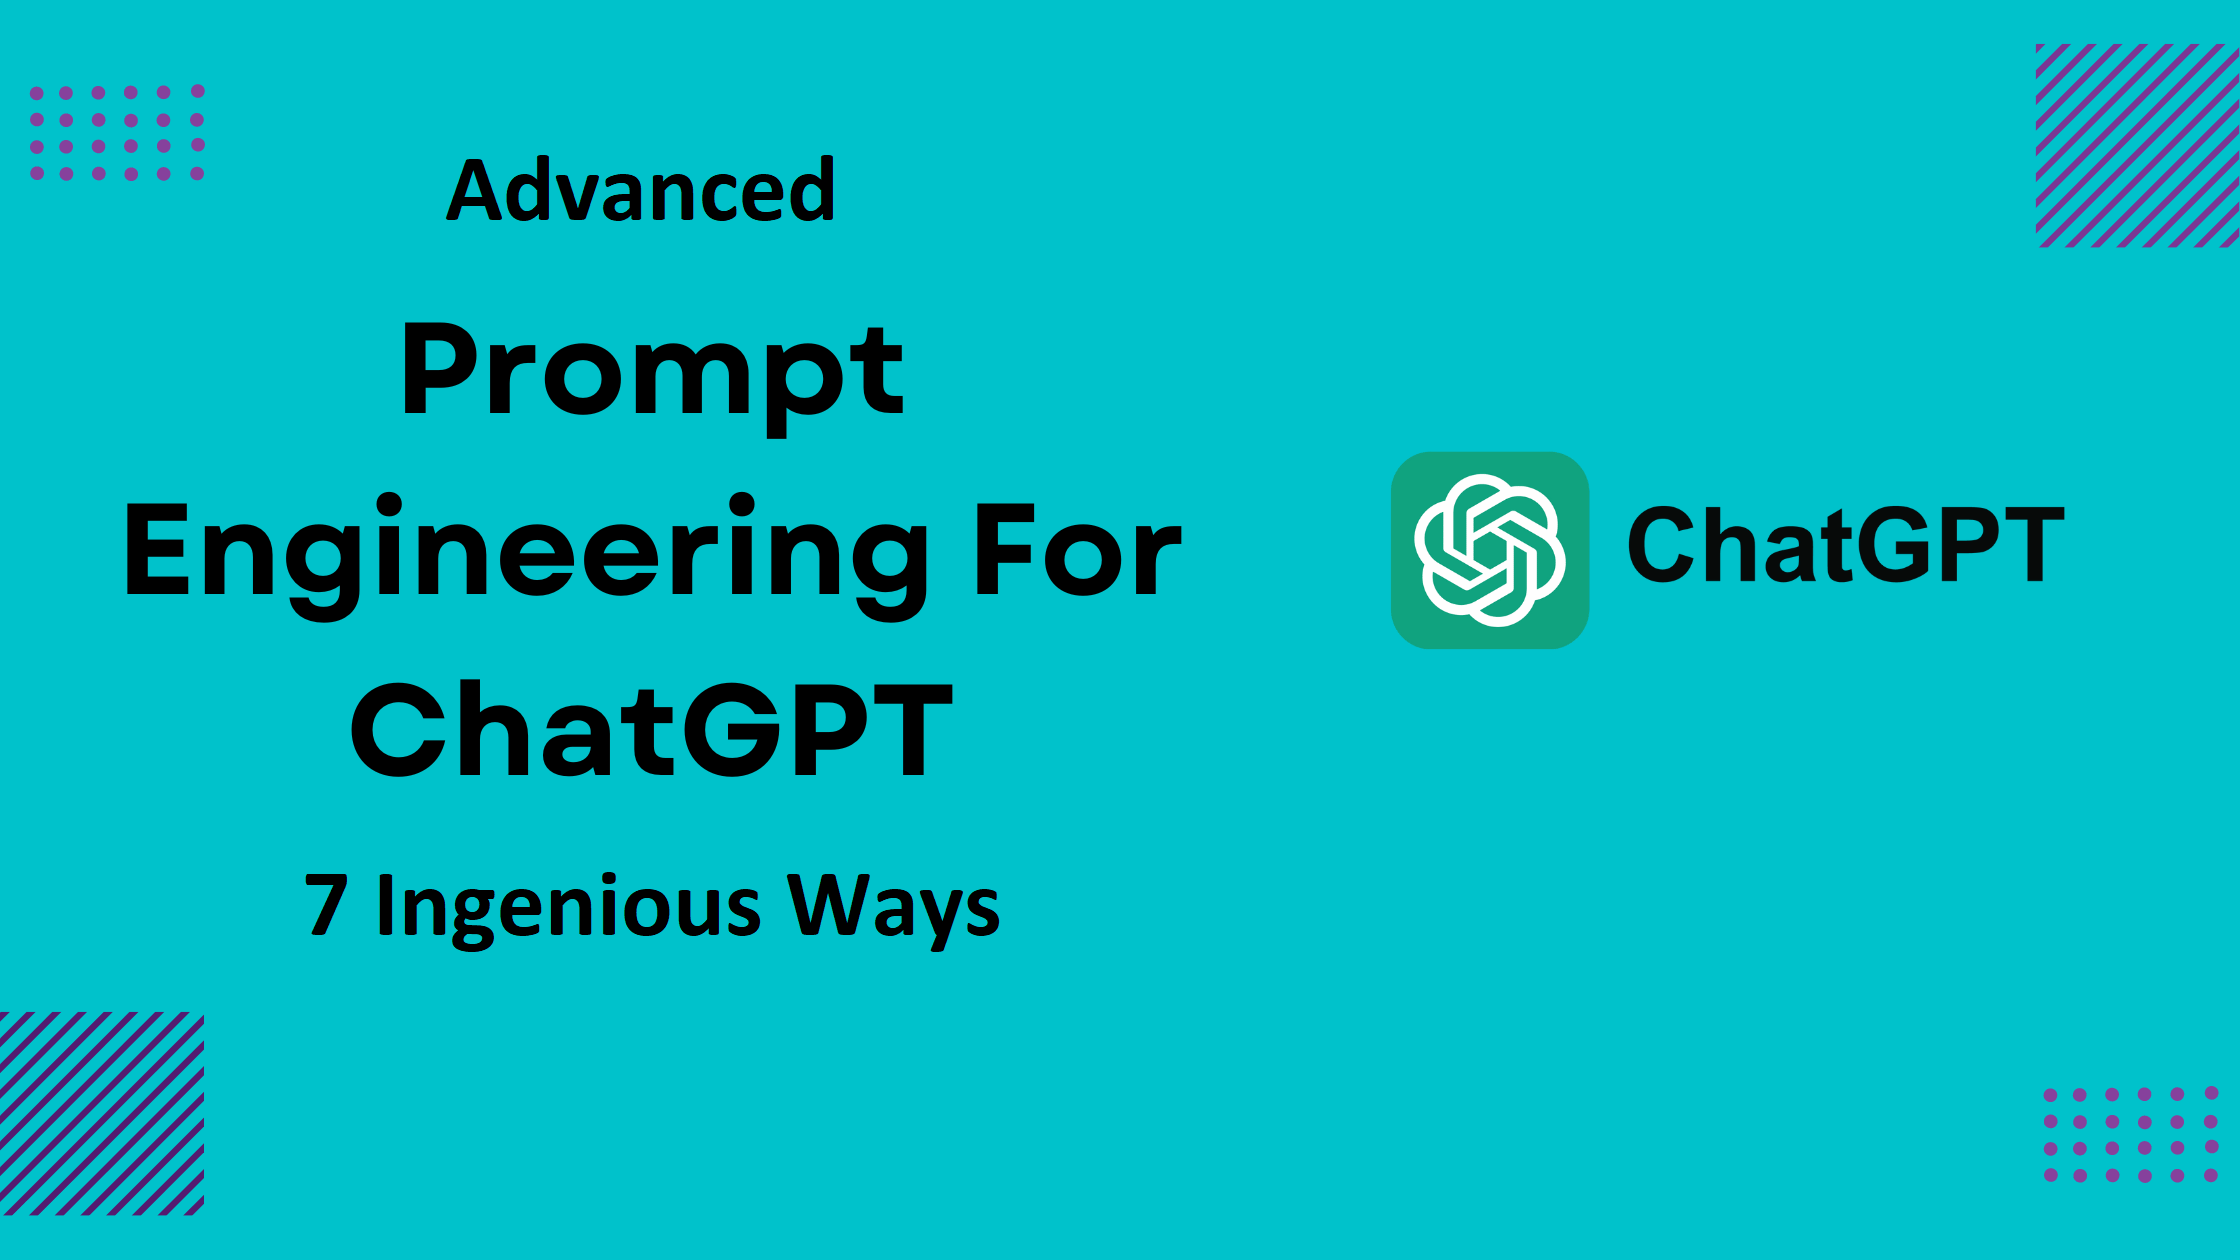 Advenced chatGPT propmpt engineering, 7 ingenious ways written